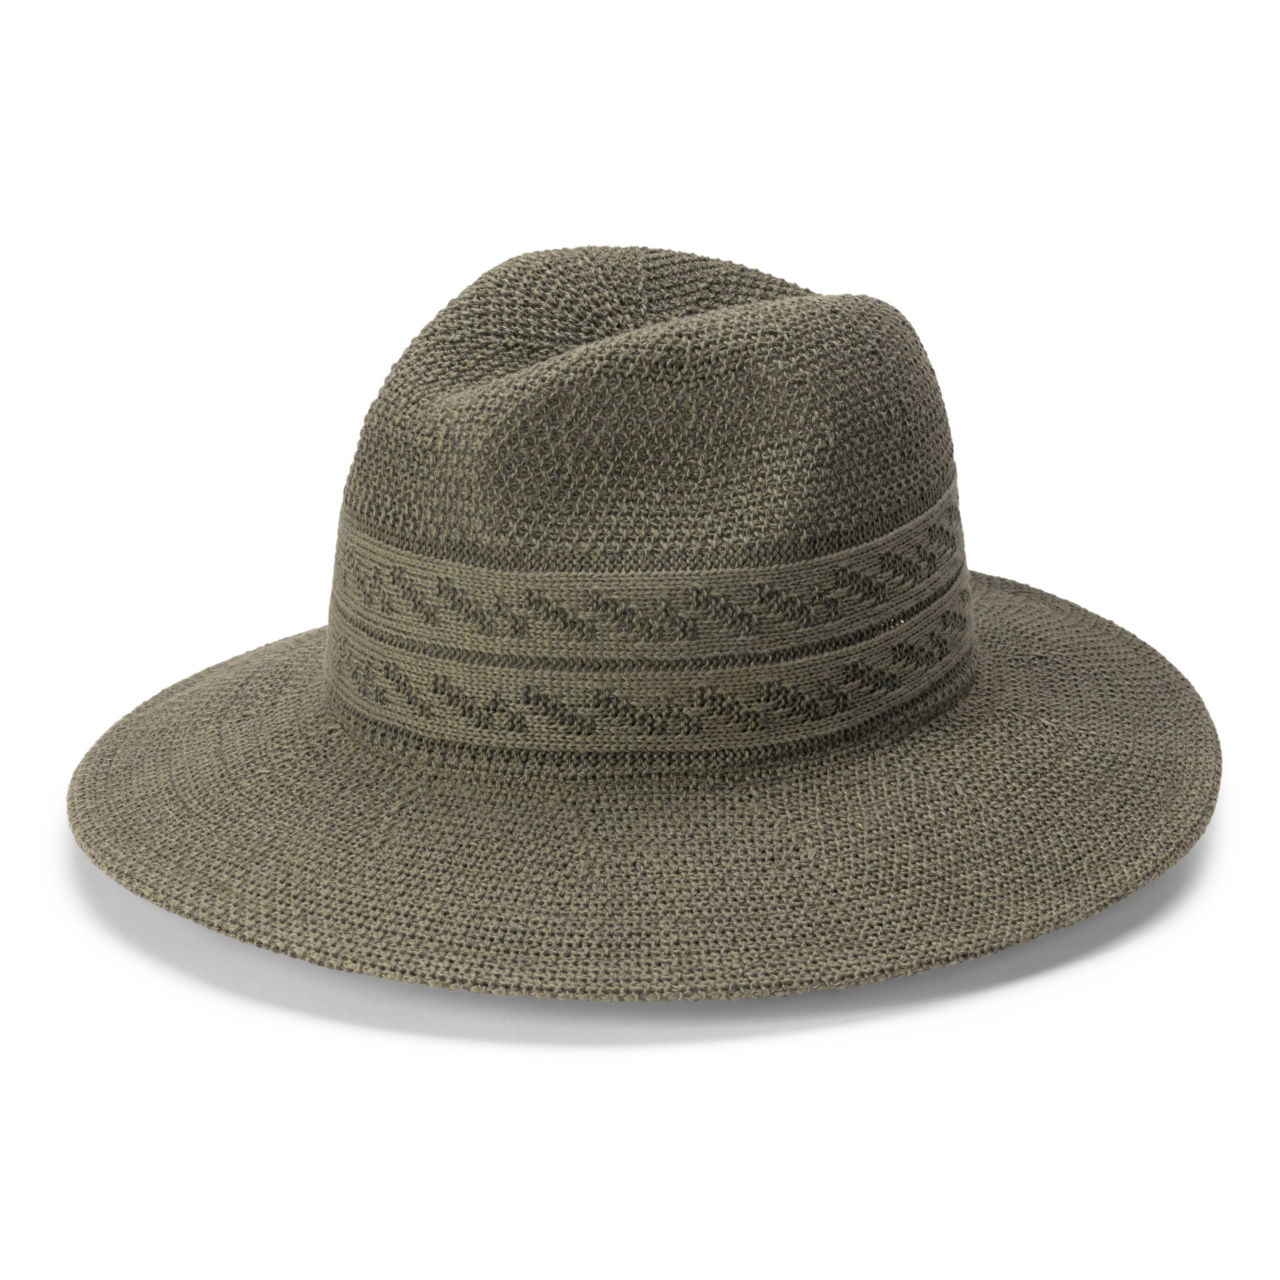 Knit Fedora Hat - SAFARI GREEN image number 0